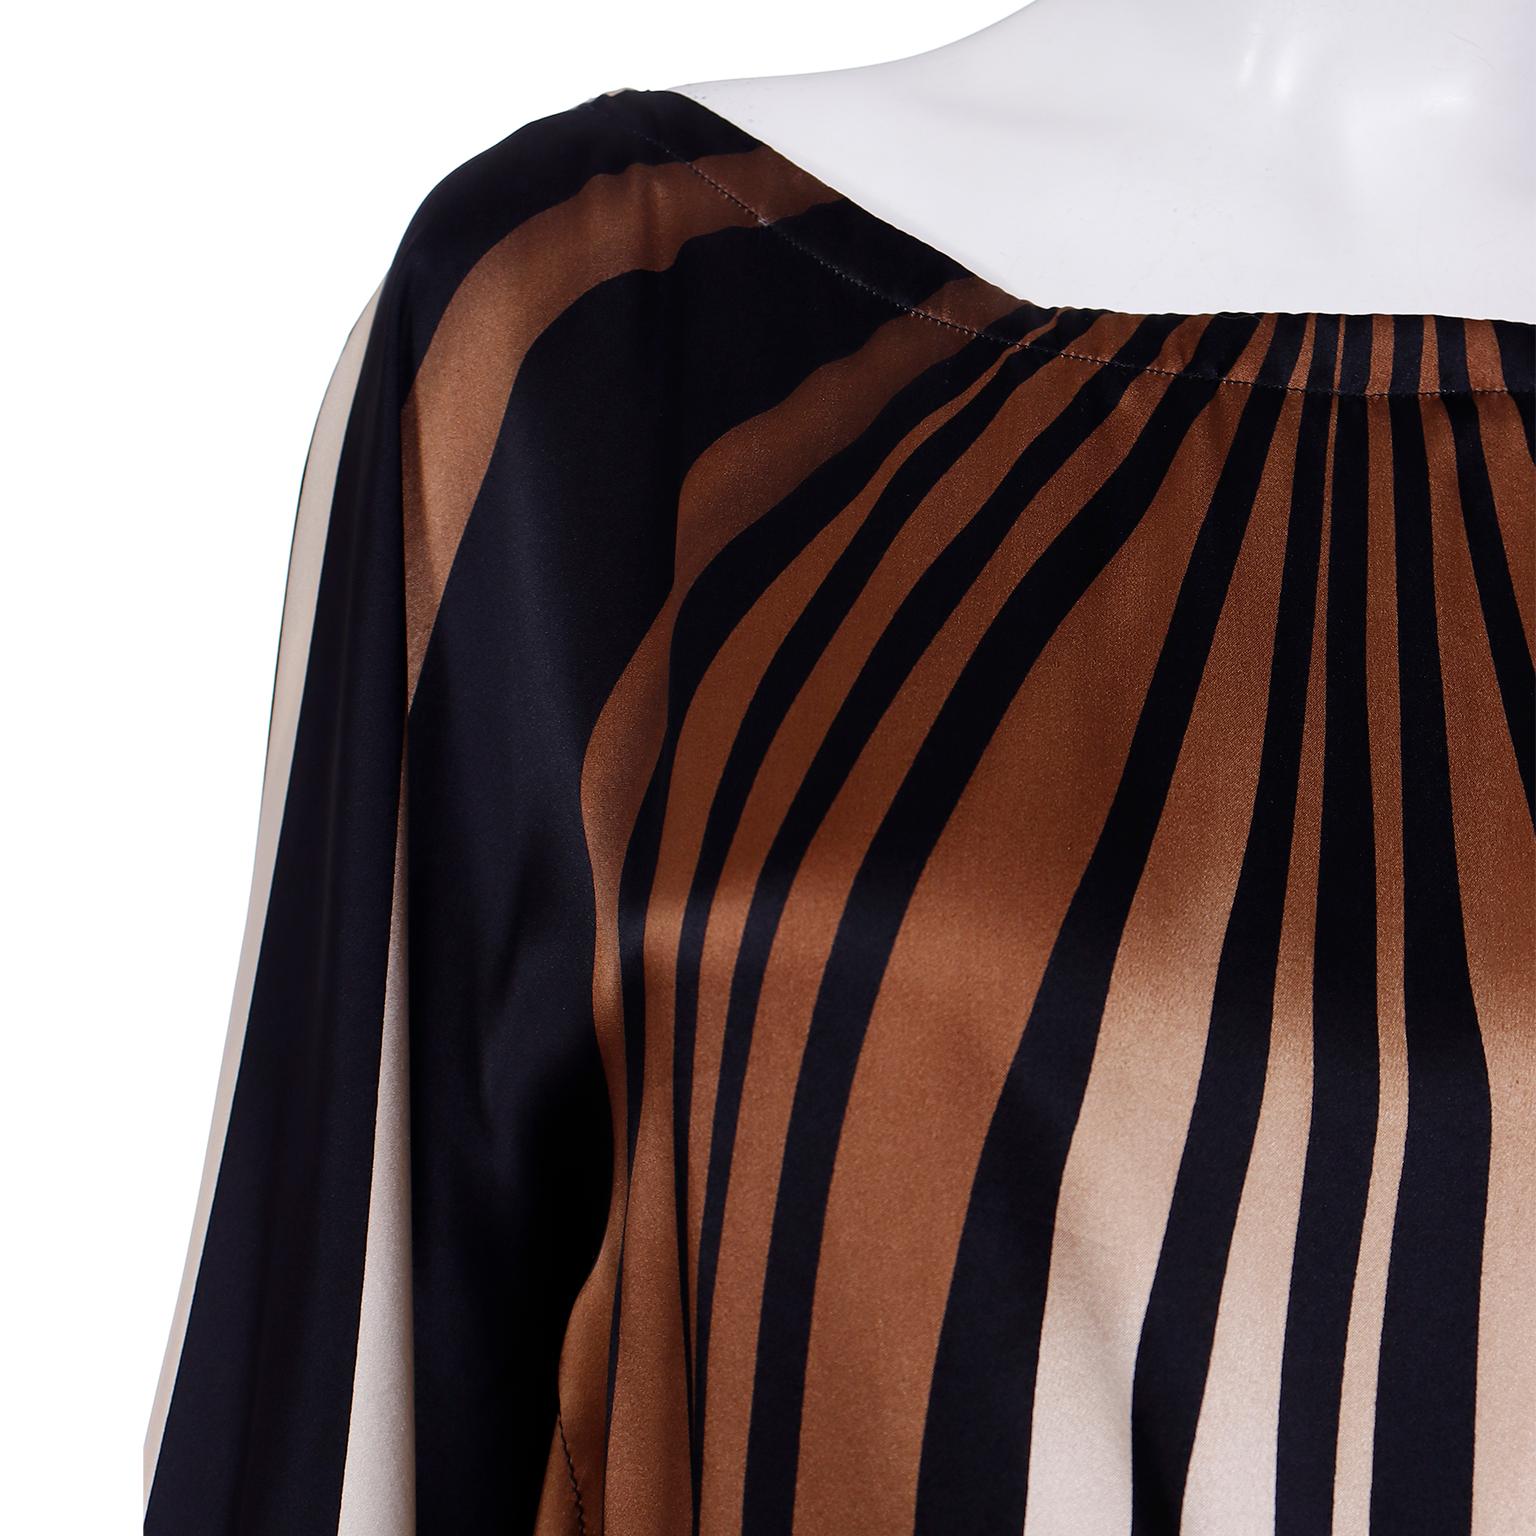 Vintage Silk Caftan Style Stripe Top in Black Brown & Ivory w Sash Belt For Sale 5